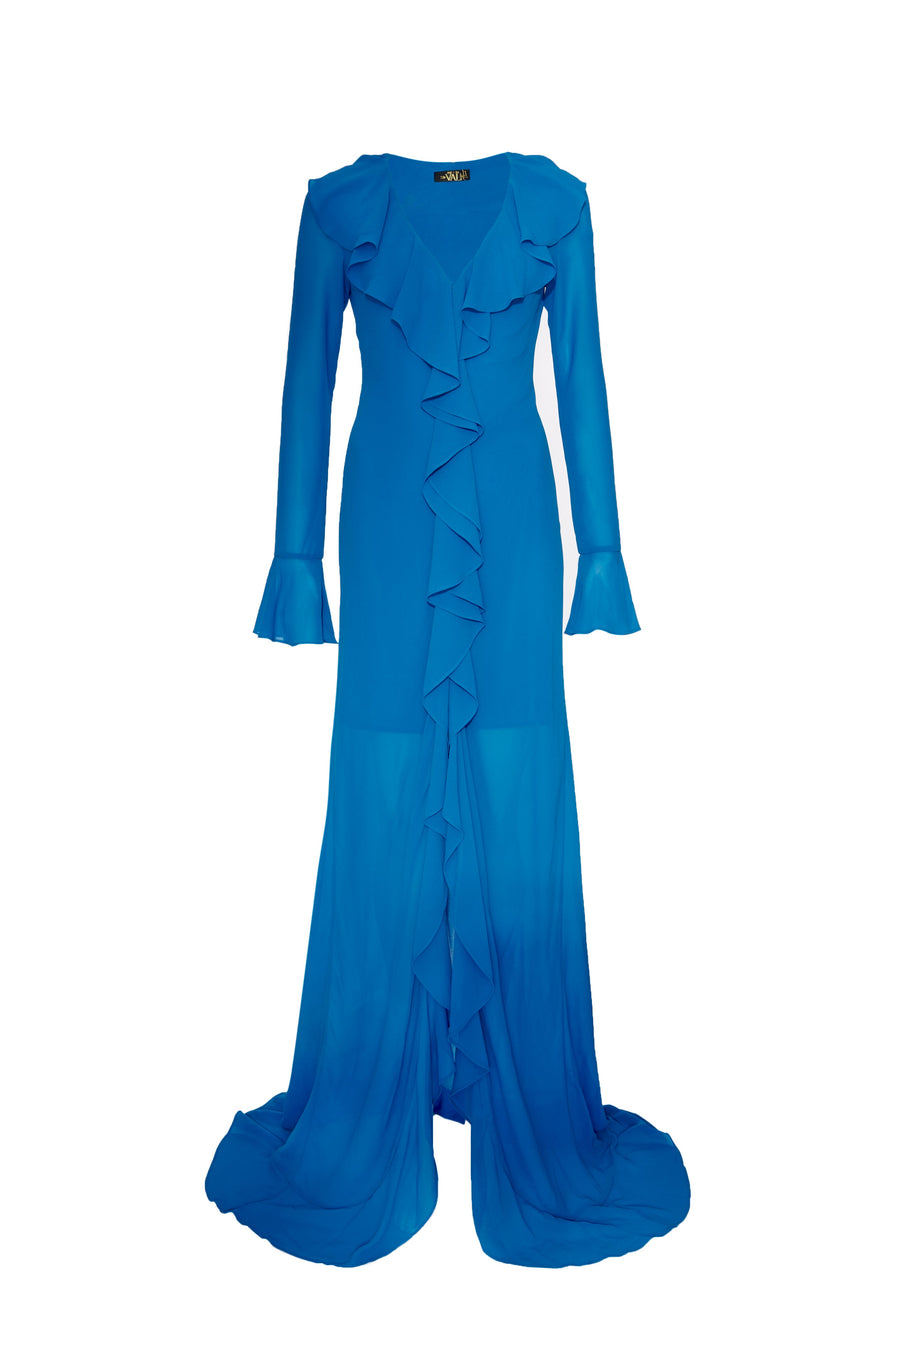 TANGERINE MAXI DRESS IN BLUE CHIFFON